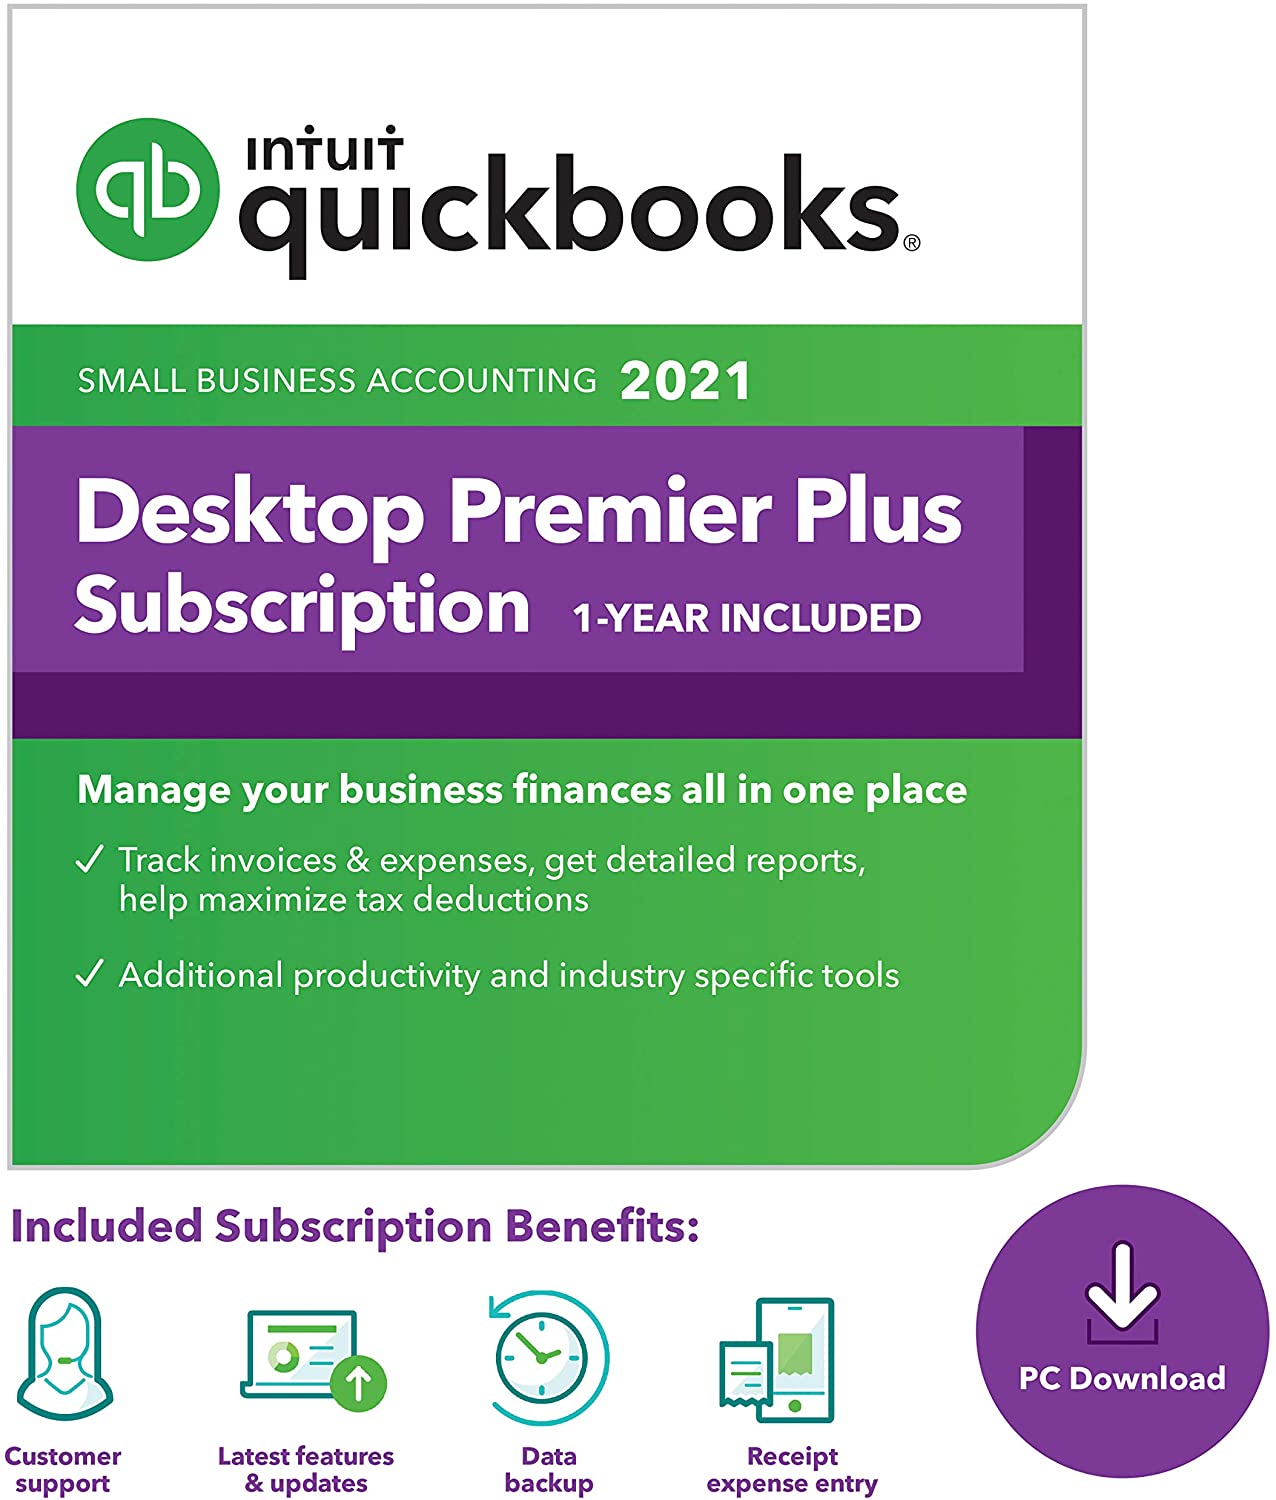 quickbooks desktop premier